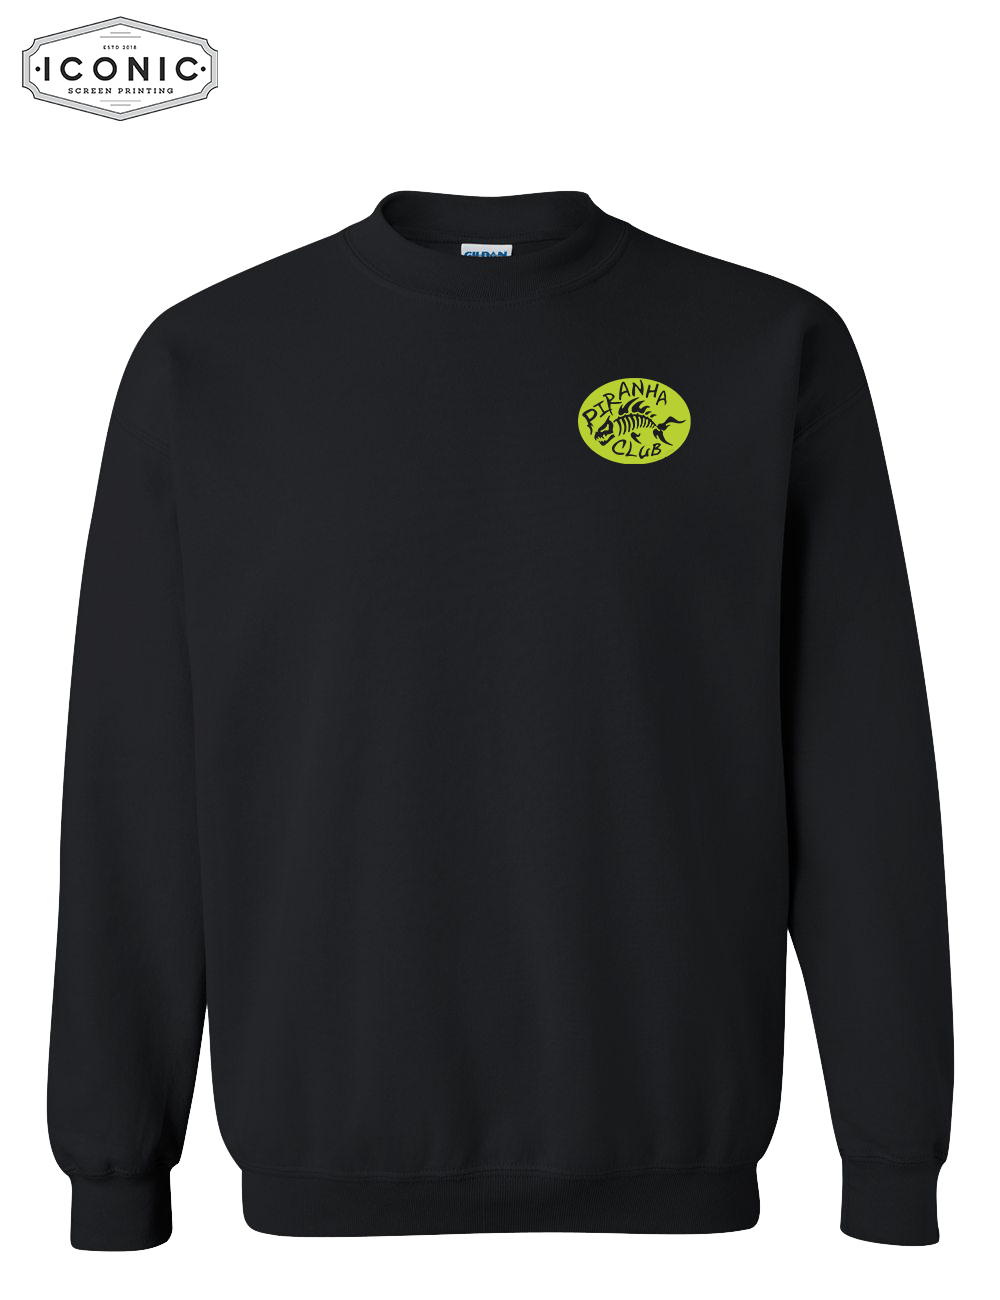 Piranha Club - Heavy Blend Sweatshirt